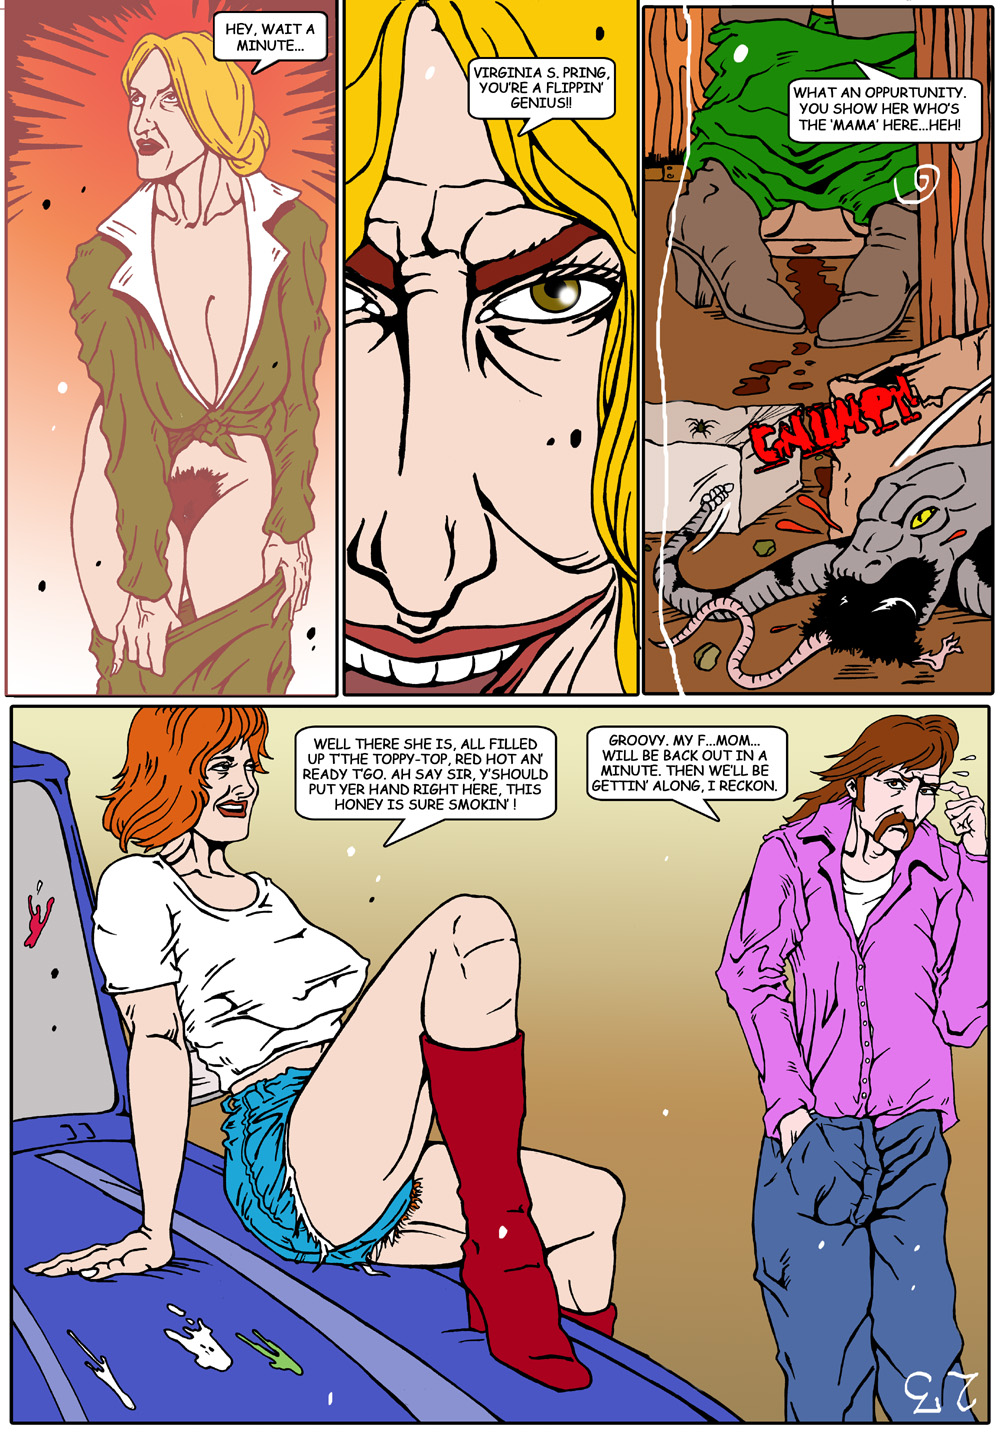 Last gas pump comic strip - Page 2